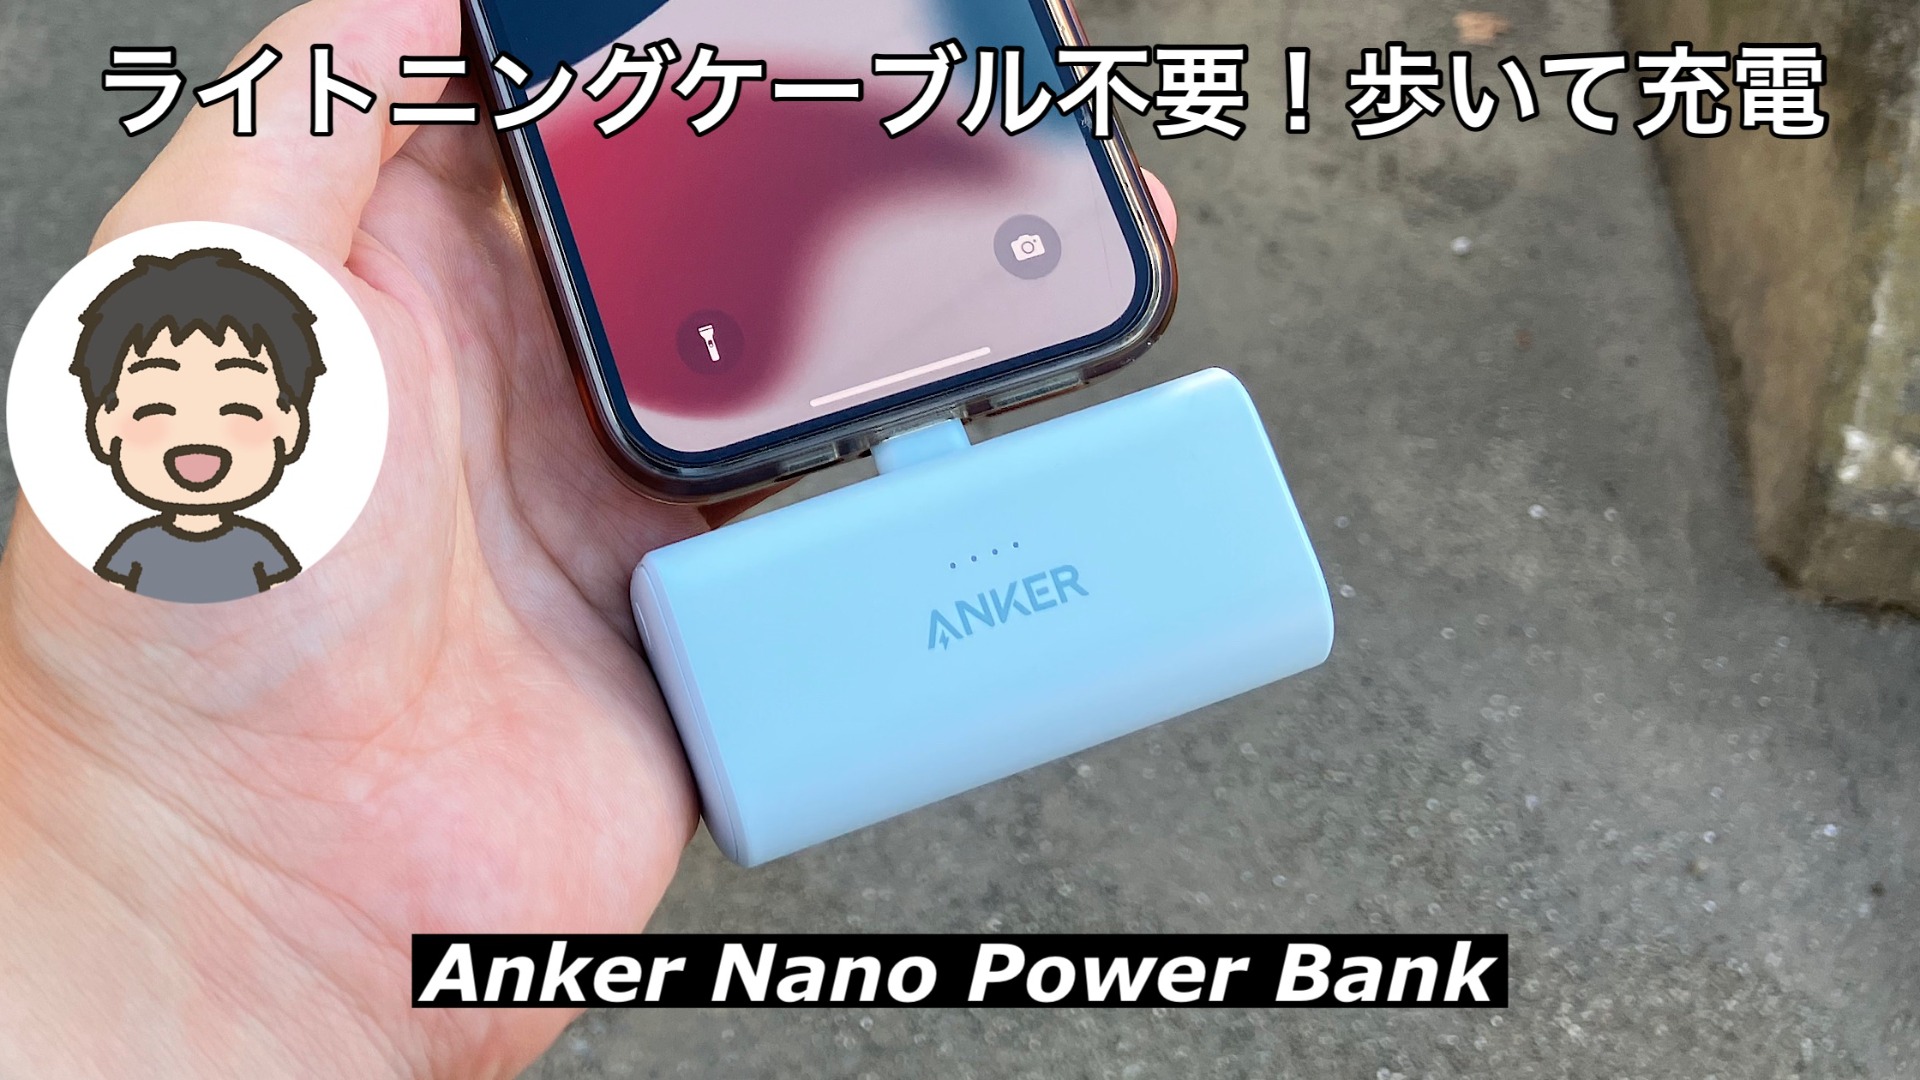 Anker Nano Power Bank！ライトニングケーブル不要の歩いて充電できる